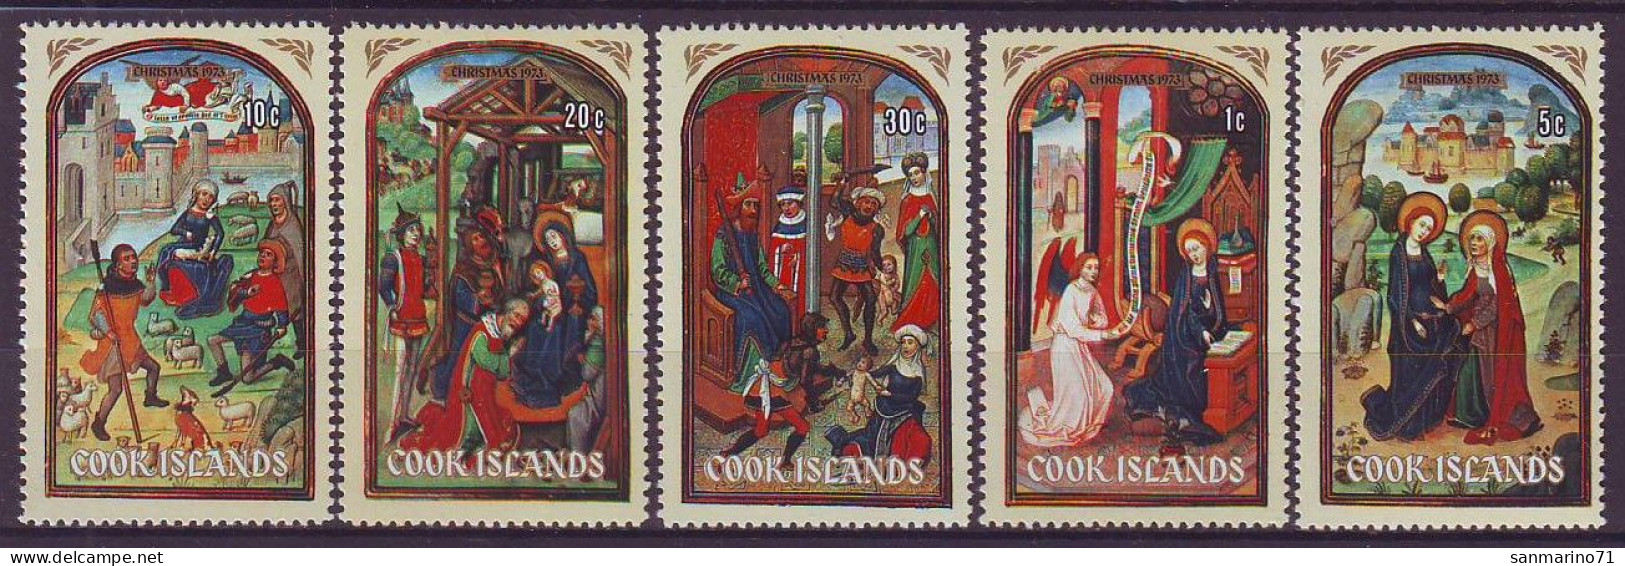 COOK ISLANDS 372-376,unused,Christmas 1973 (**) - Cook Islands